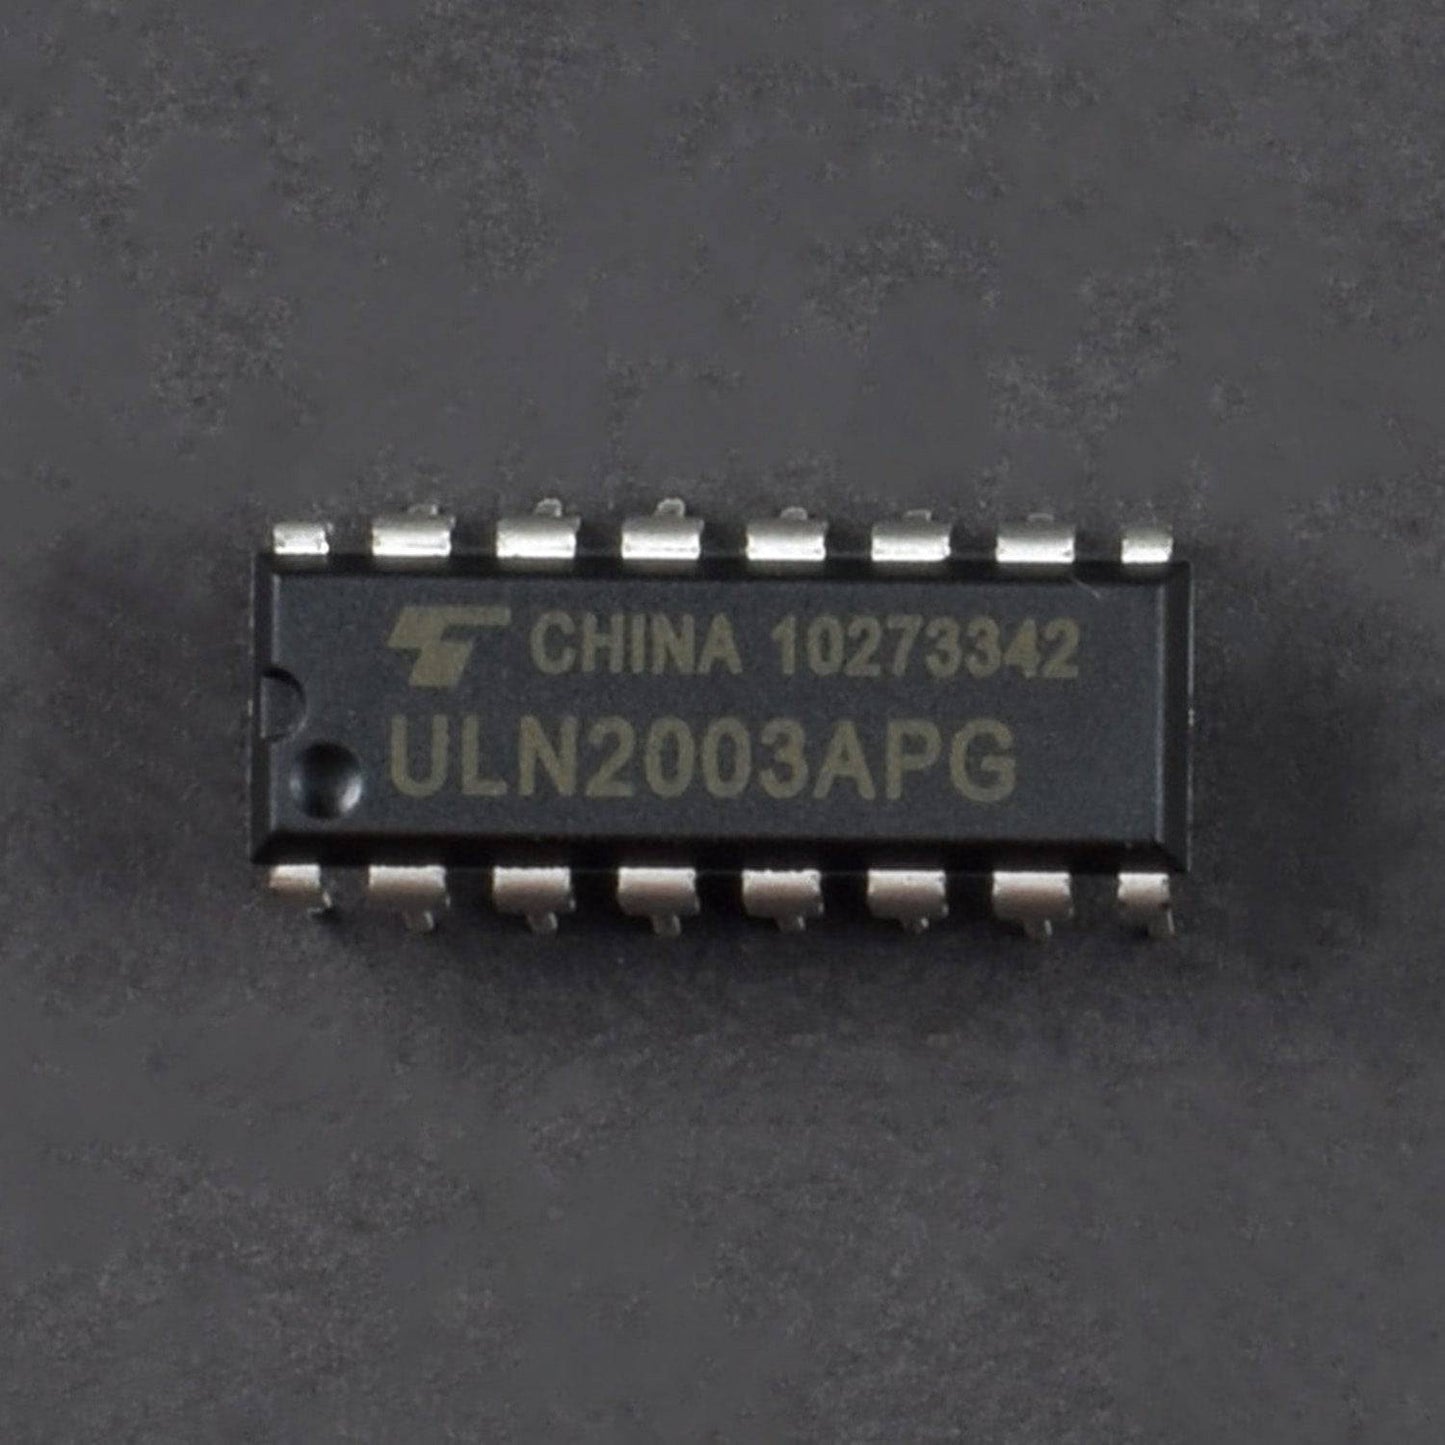 ULN2003 High-Voltage, High-Current Seven Darlington Driver Transistor Arrays For Motor Driver -RS082 - REES52